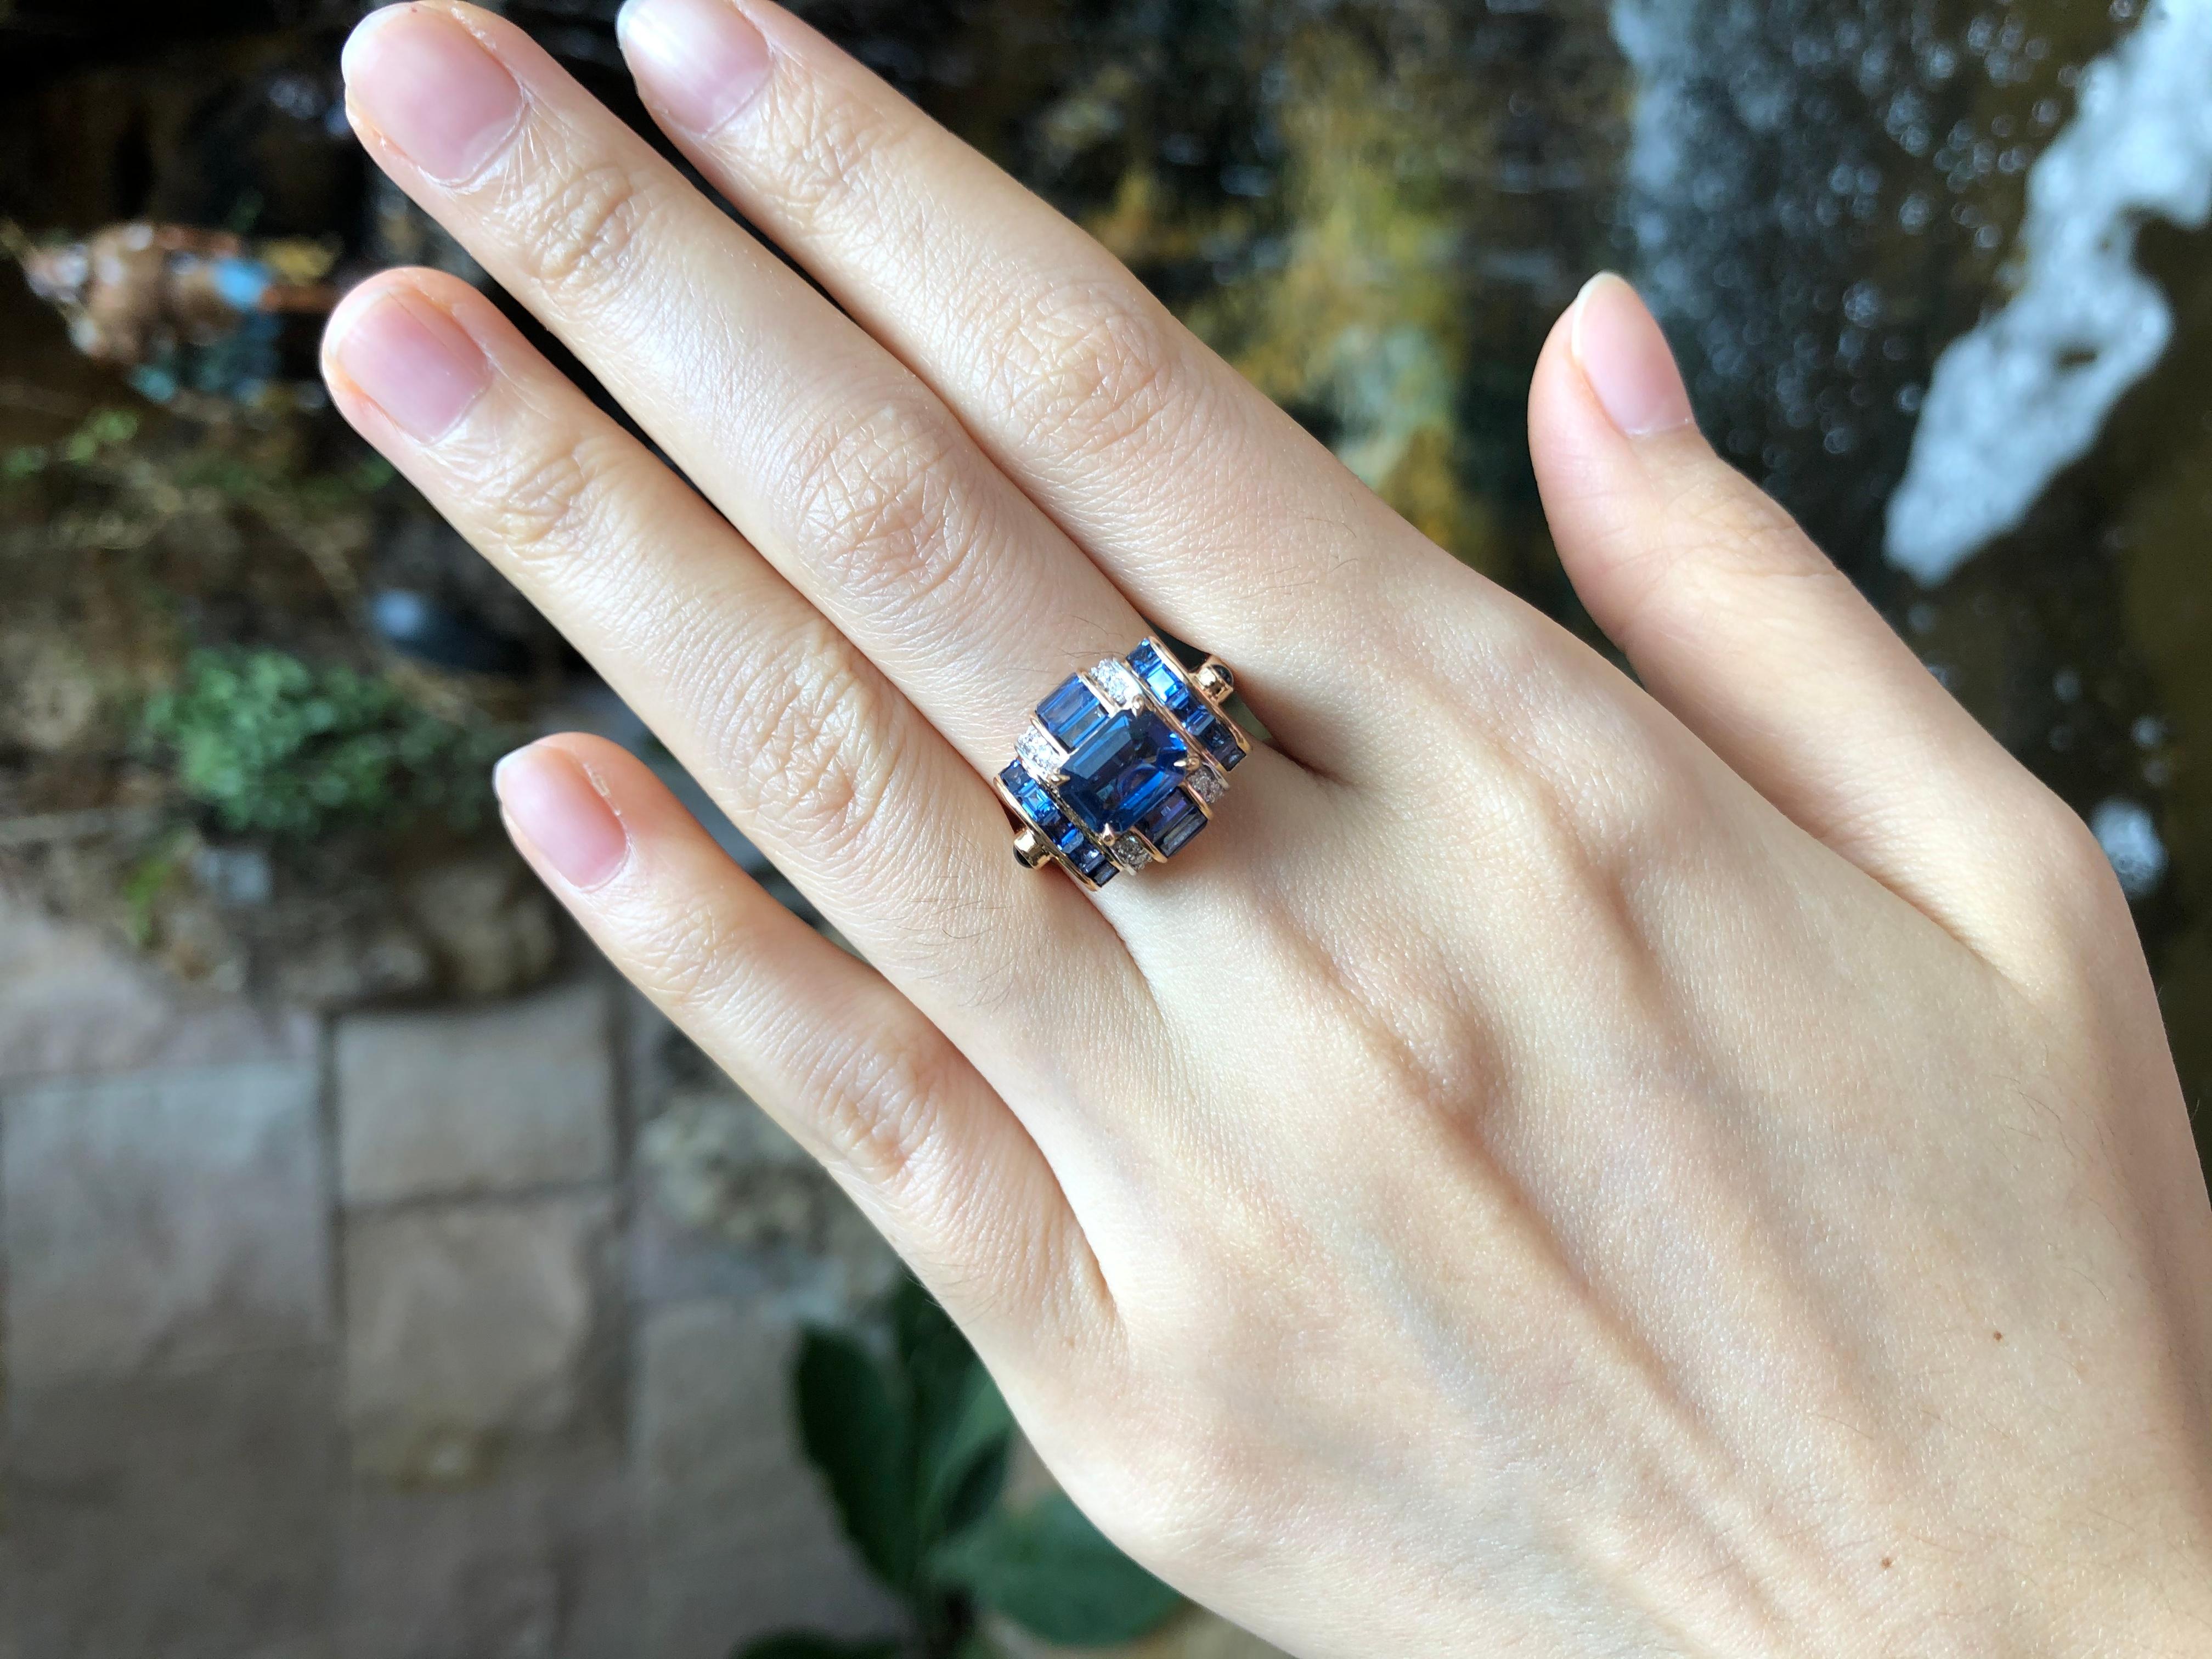 Blue Sapphire 1.49 carats with Blue Sapphire 1.96 carats, Diamond 0.11 carat and Cabochon Blue Sapphire 0.15 carat Ring set in 18 Karat Rose Gold Settings

Width:  1.9 cm 
Length: 1.4 cm
Ring Size: 54
Total Weight: 7.08 grams

